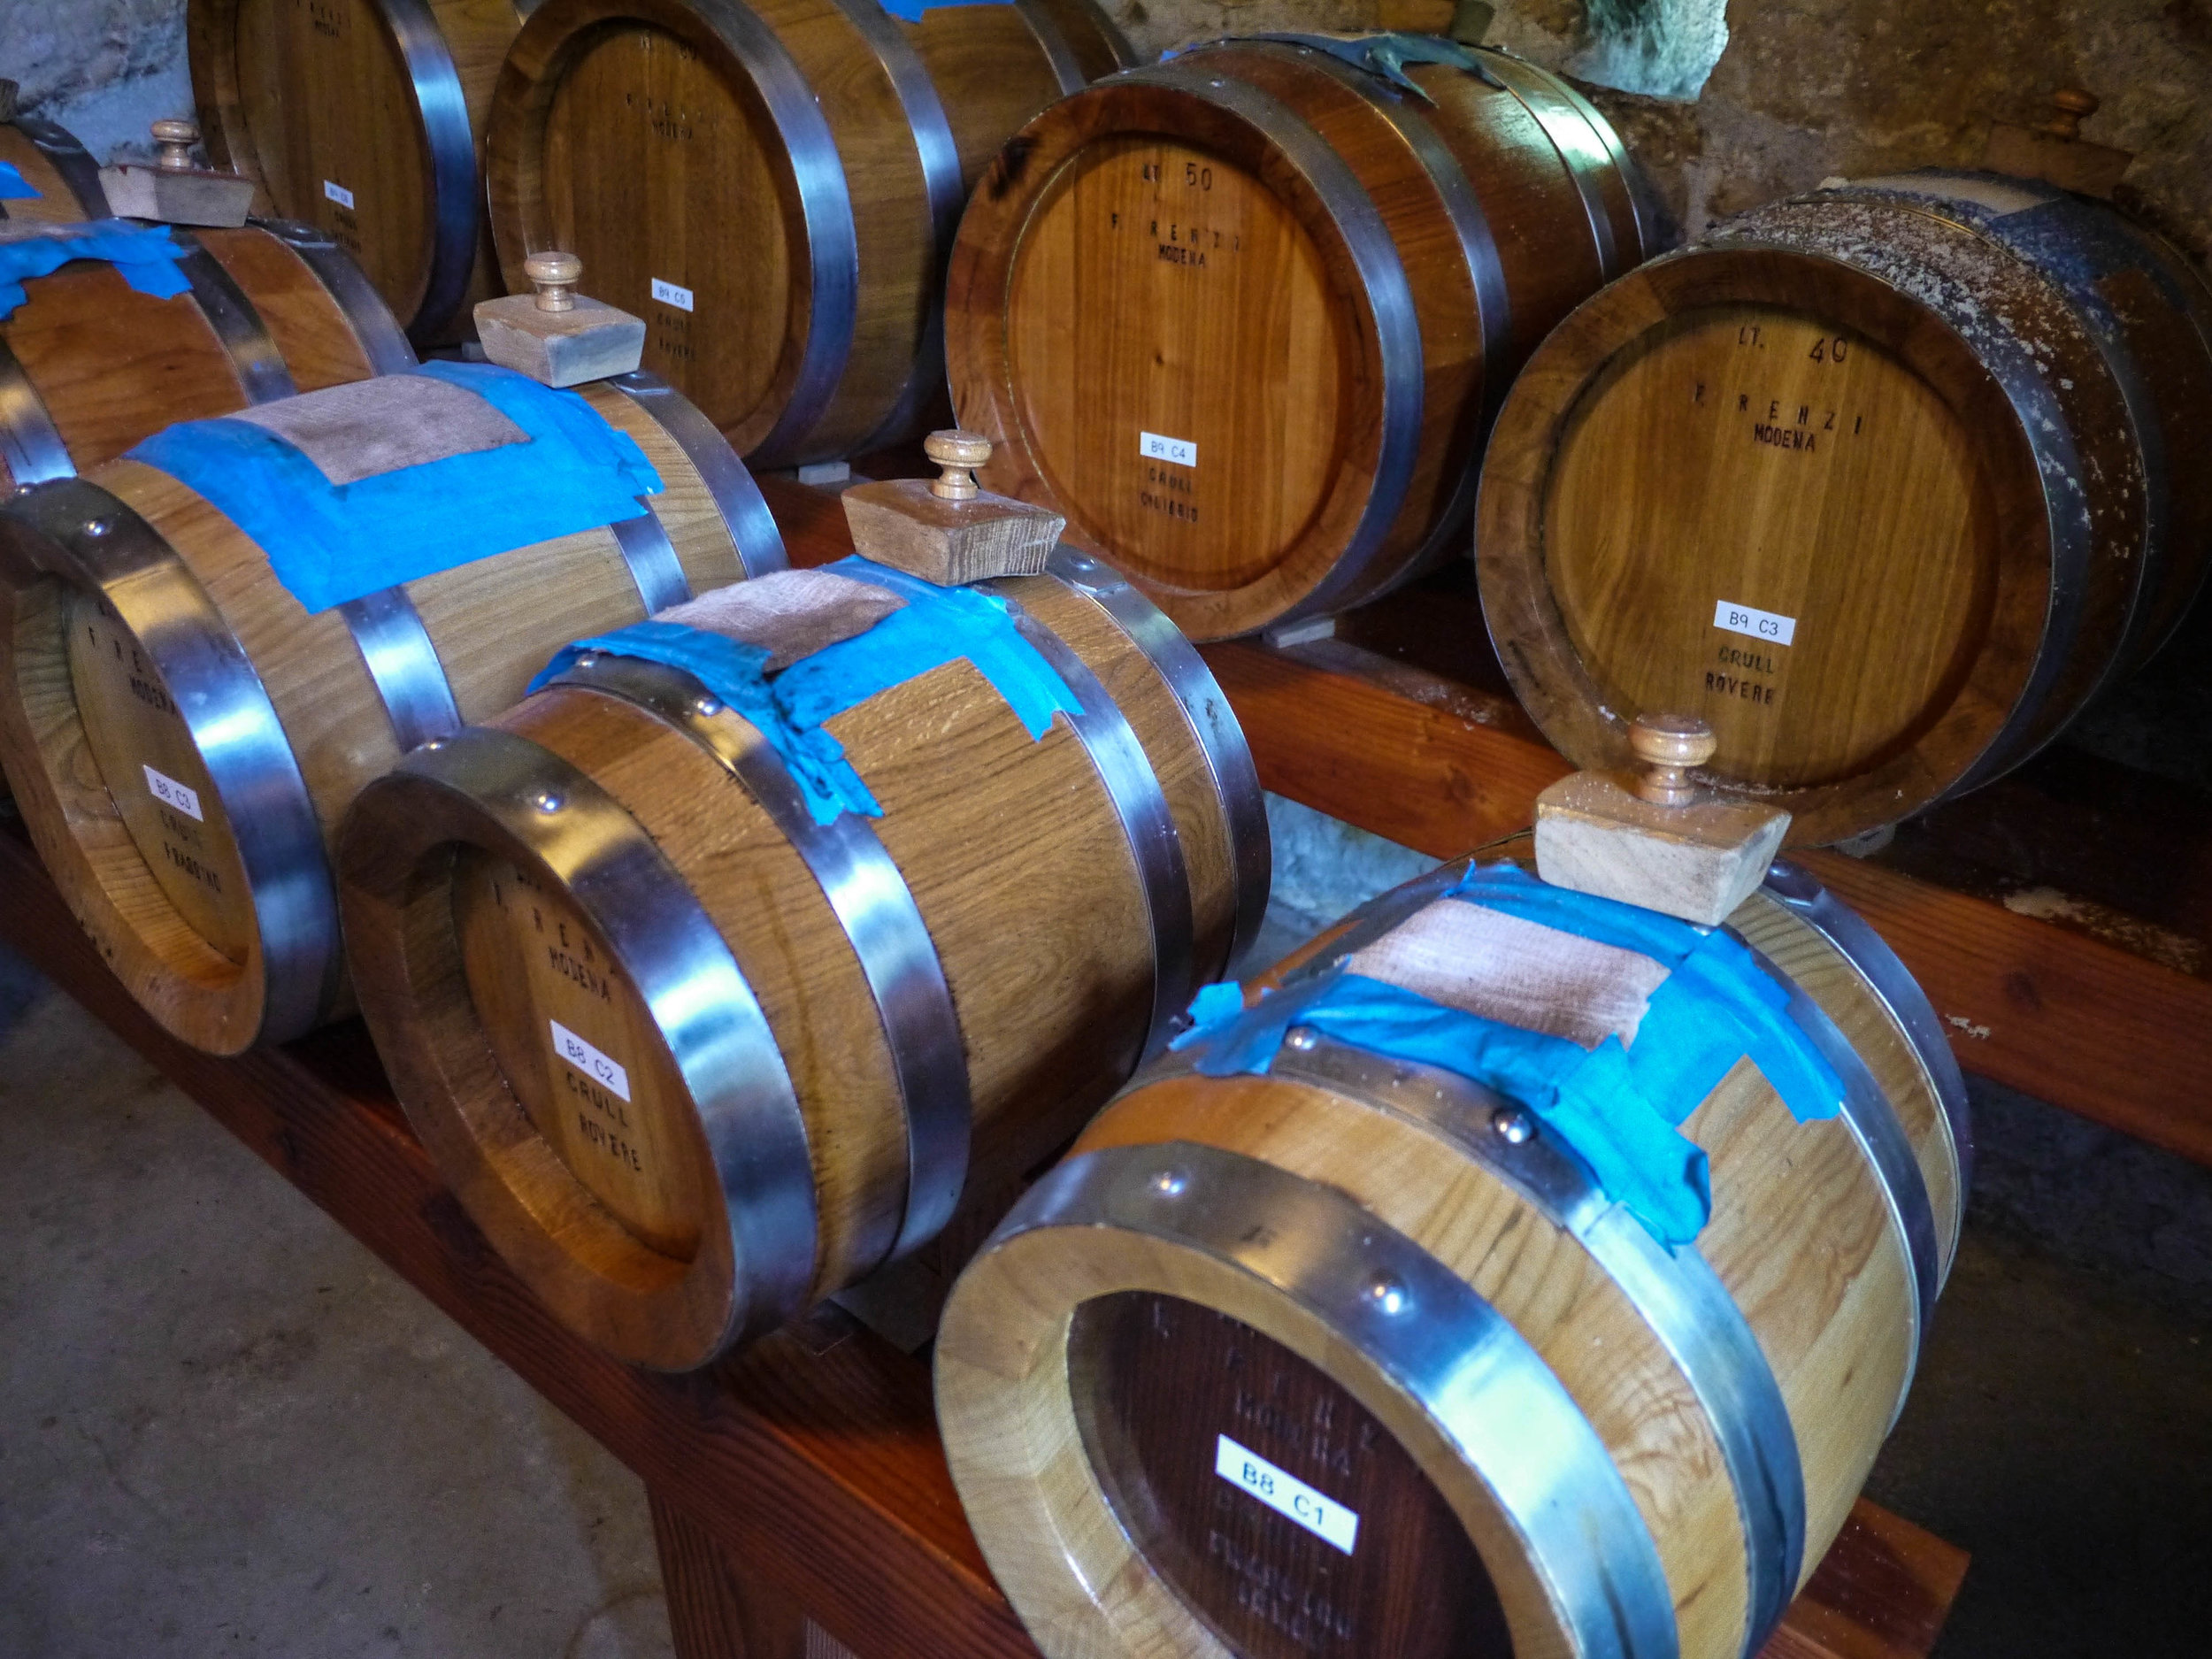 and barrels of balsamic vinegar.